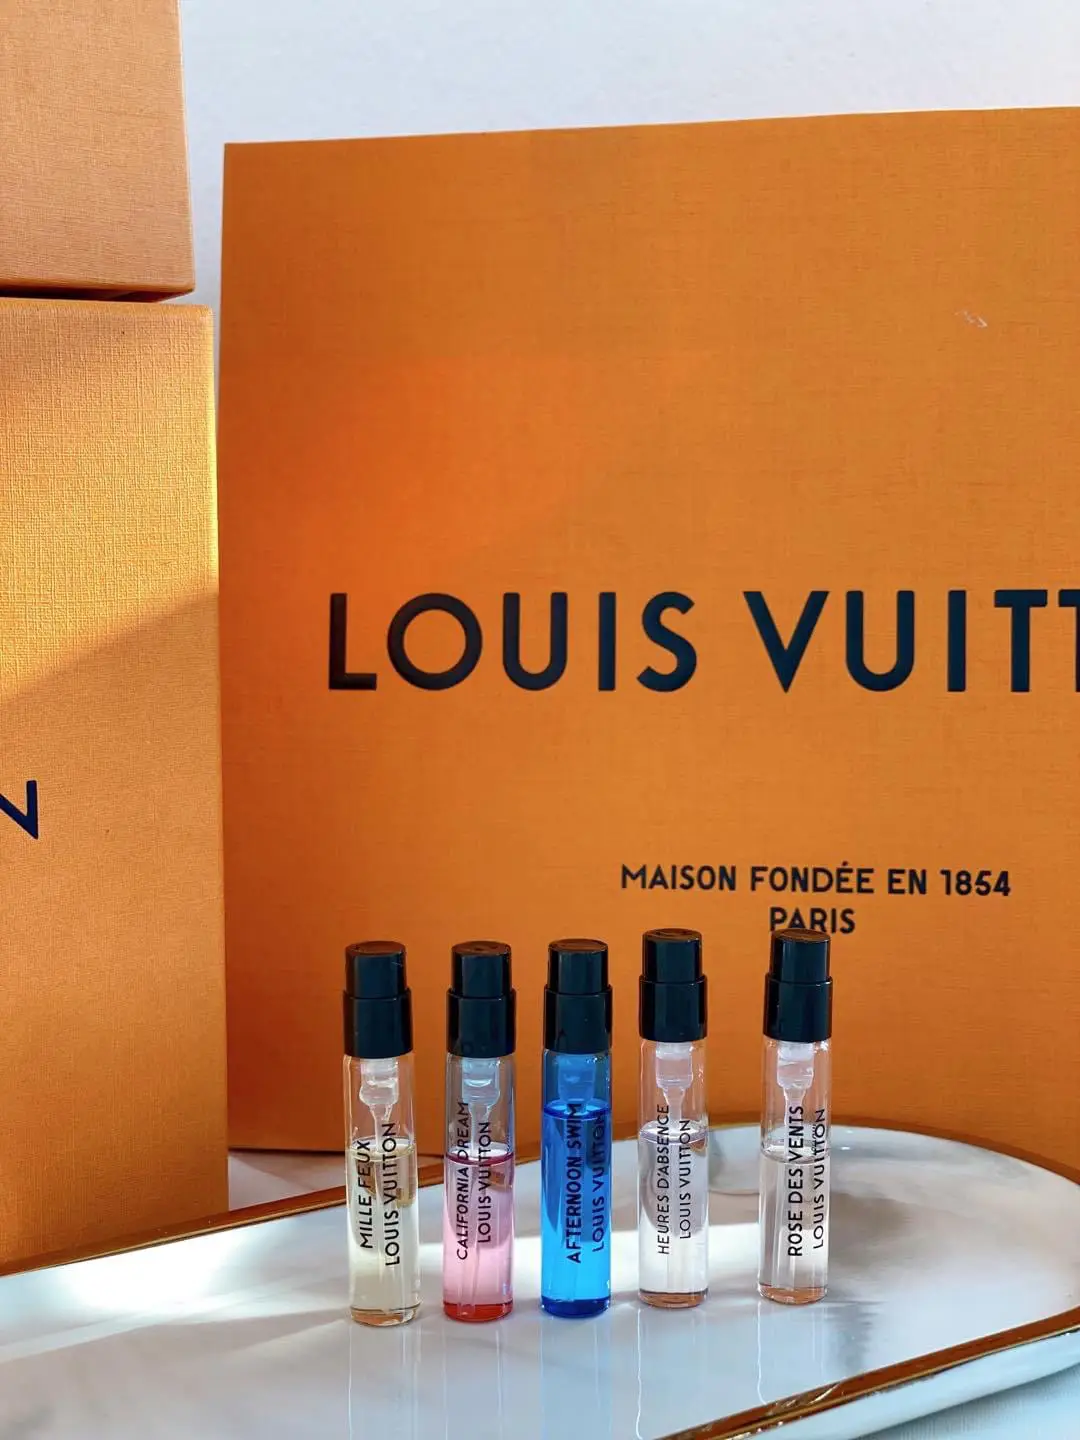 The article: California Dream Louis Vuitton